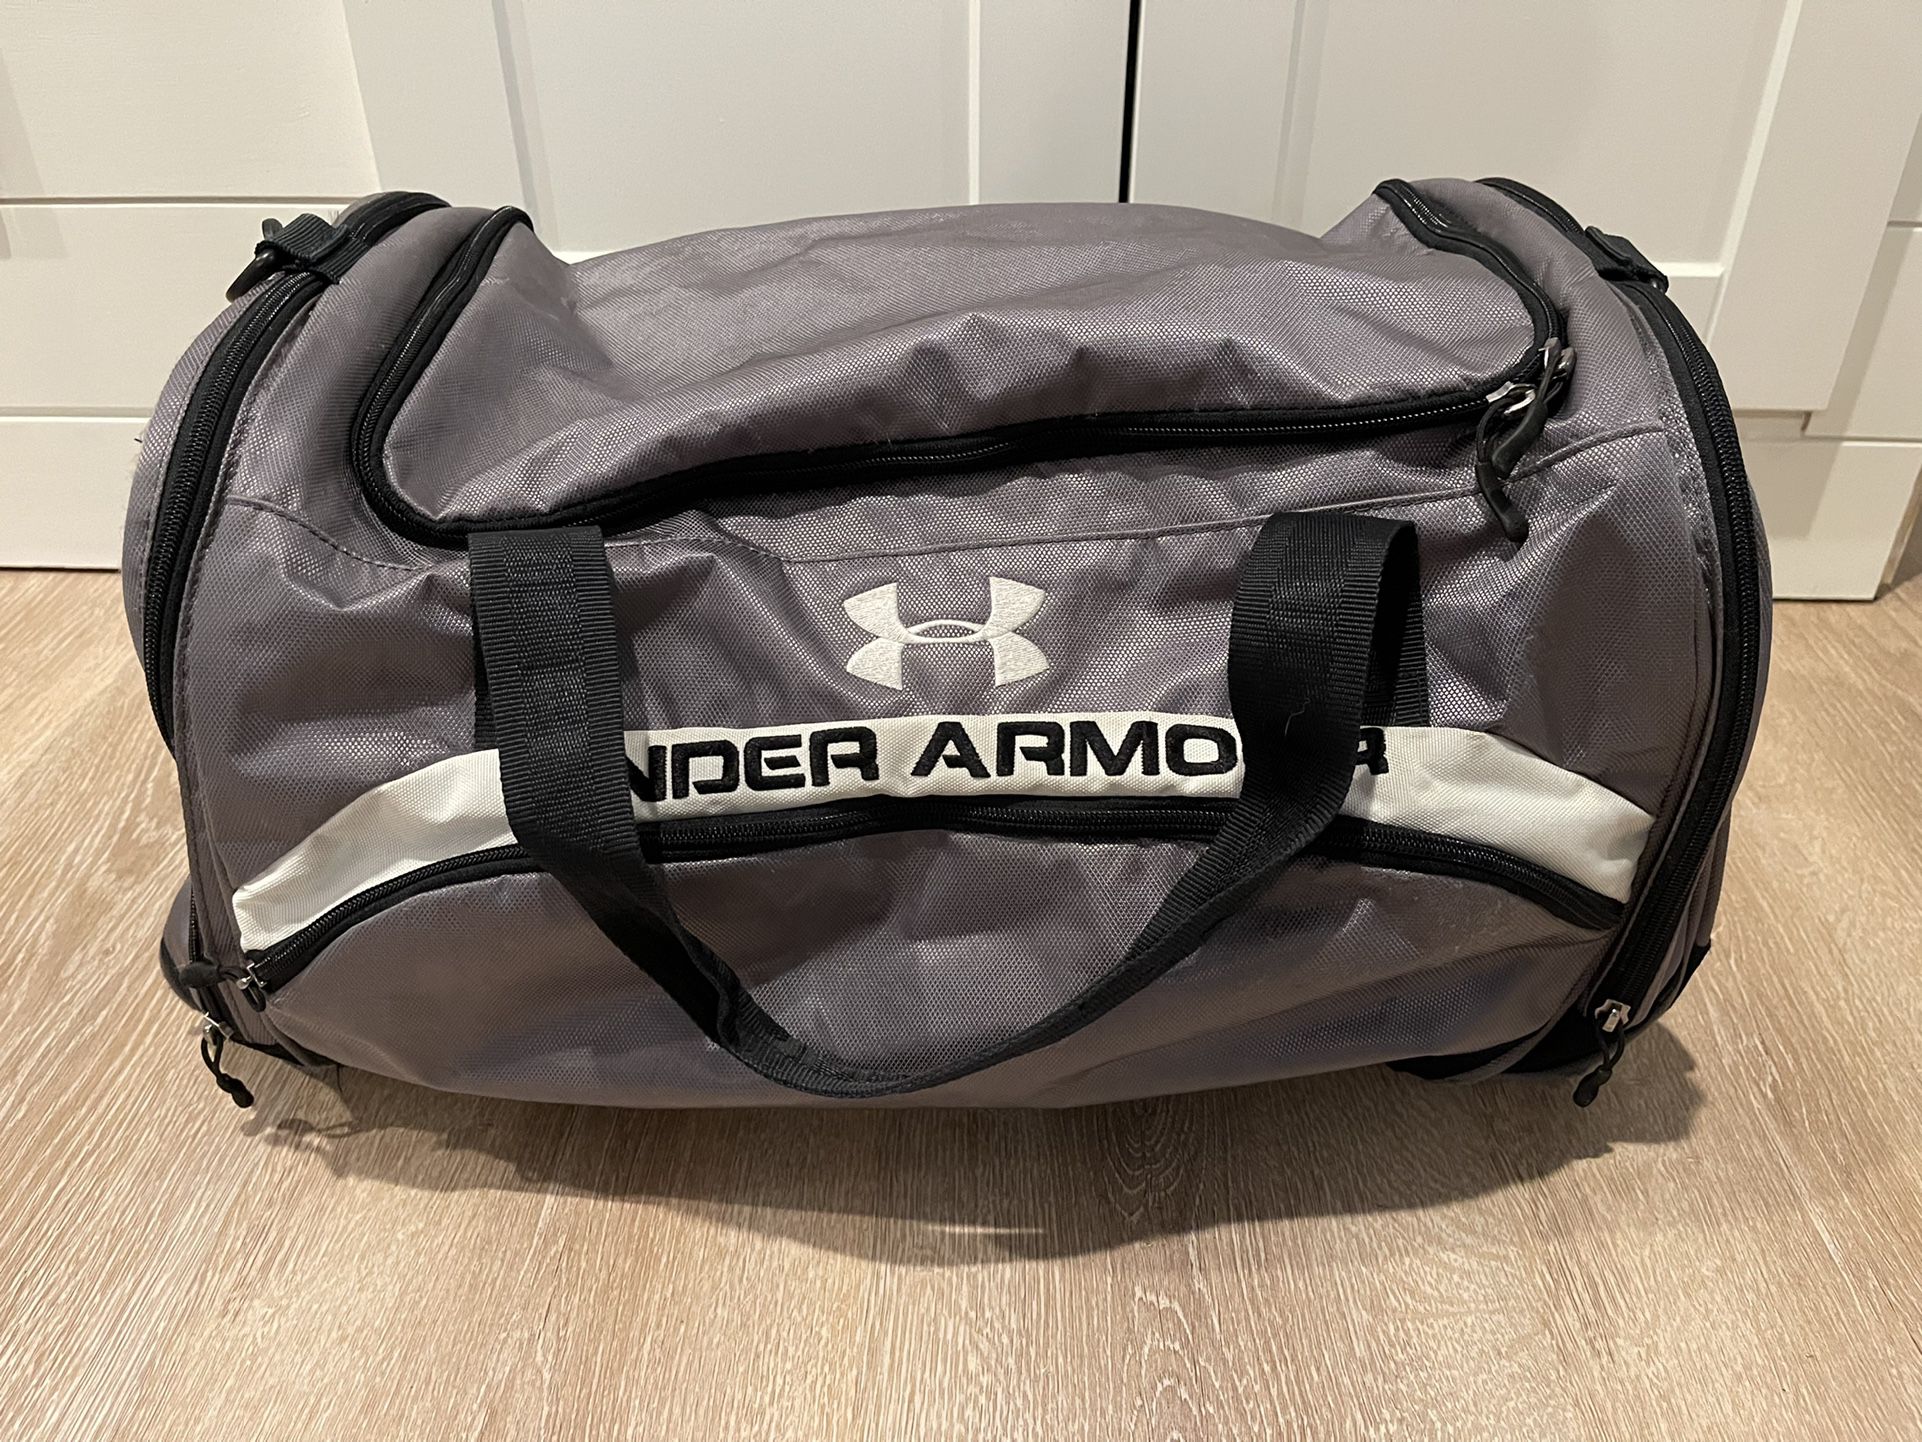 Under Armor Duffle Bag